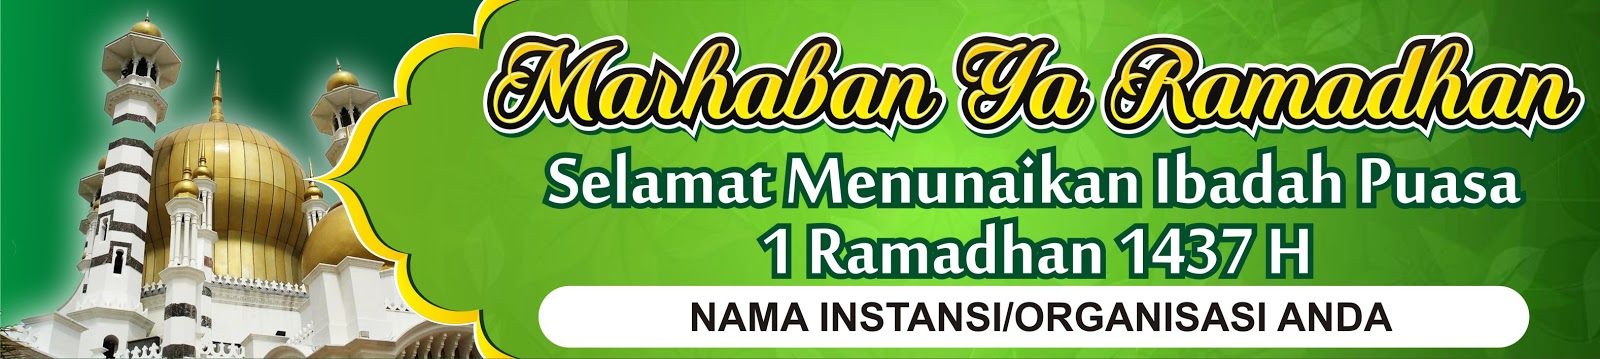 DAMEN ART: GRATIS! 3 Desain Spanduk Ramadhan 1437 H